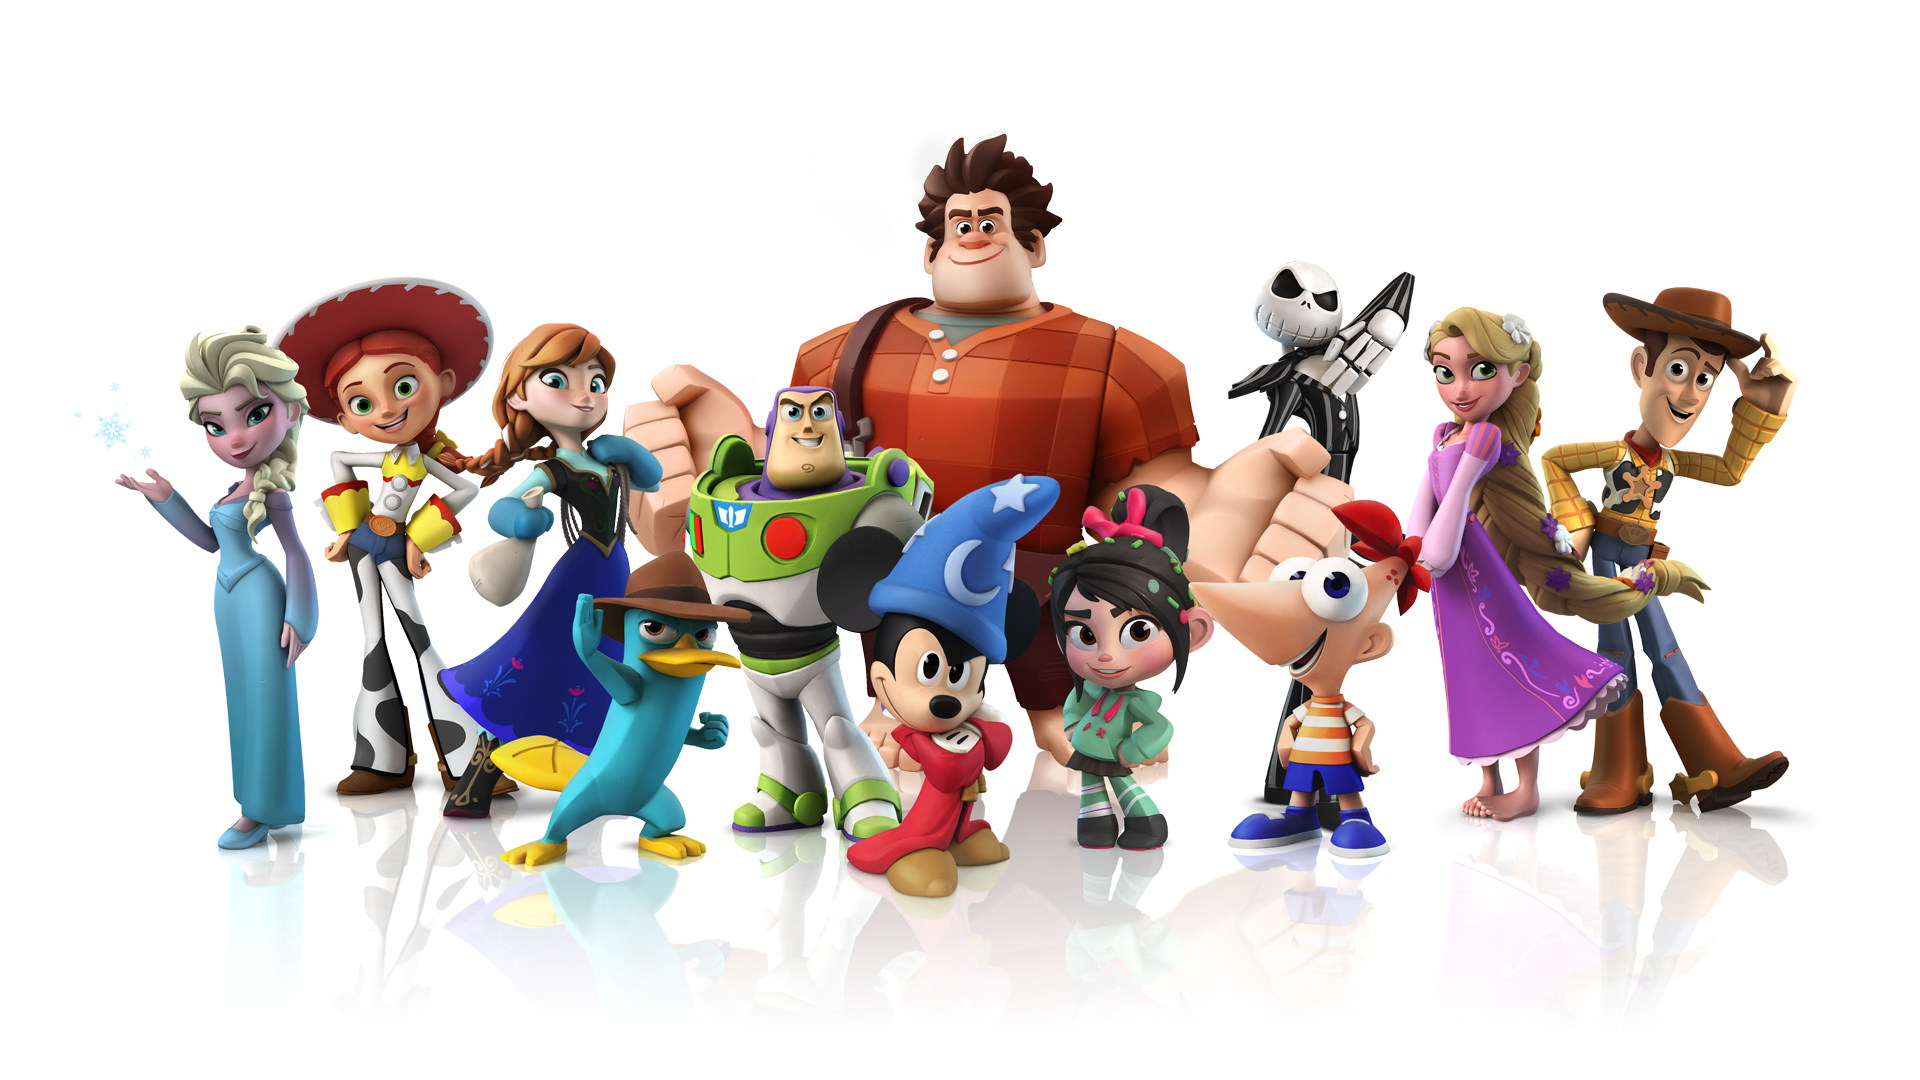 Disney Infinity cast figurines